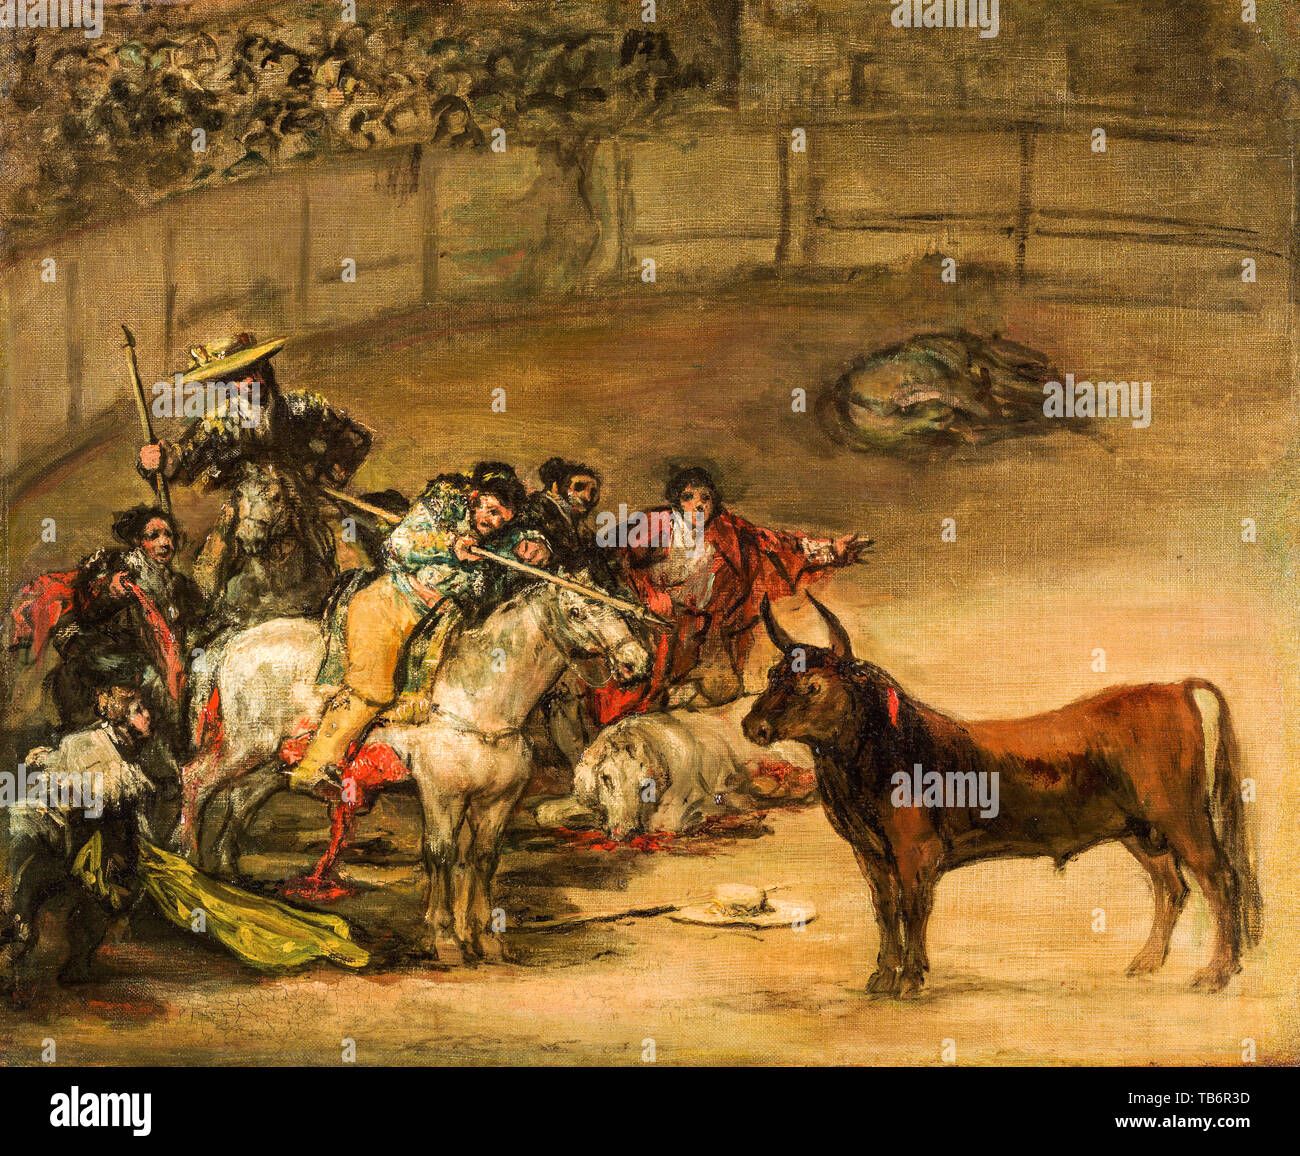 Francisco de Goya, corrida de toros, la suerte de varas, pintura, 1824 Foto de stock